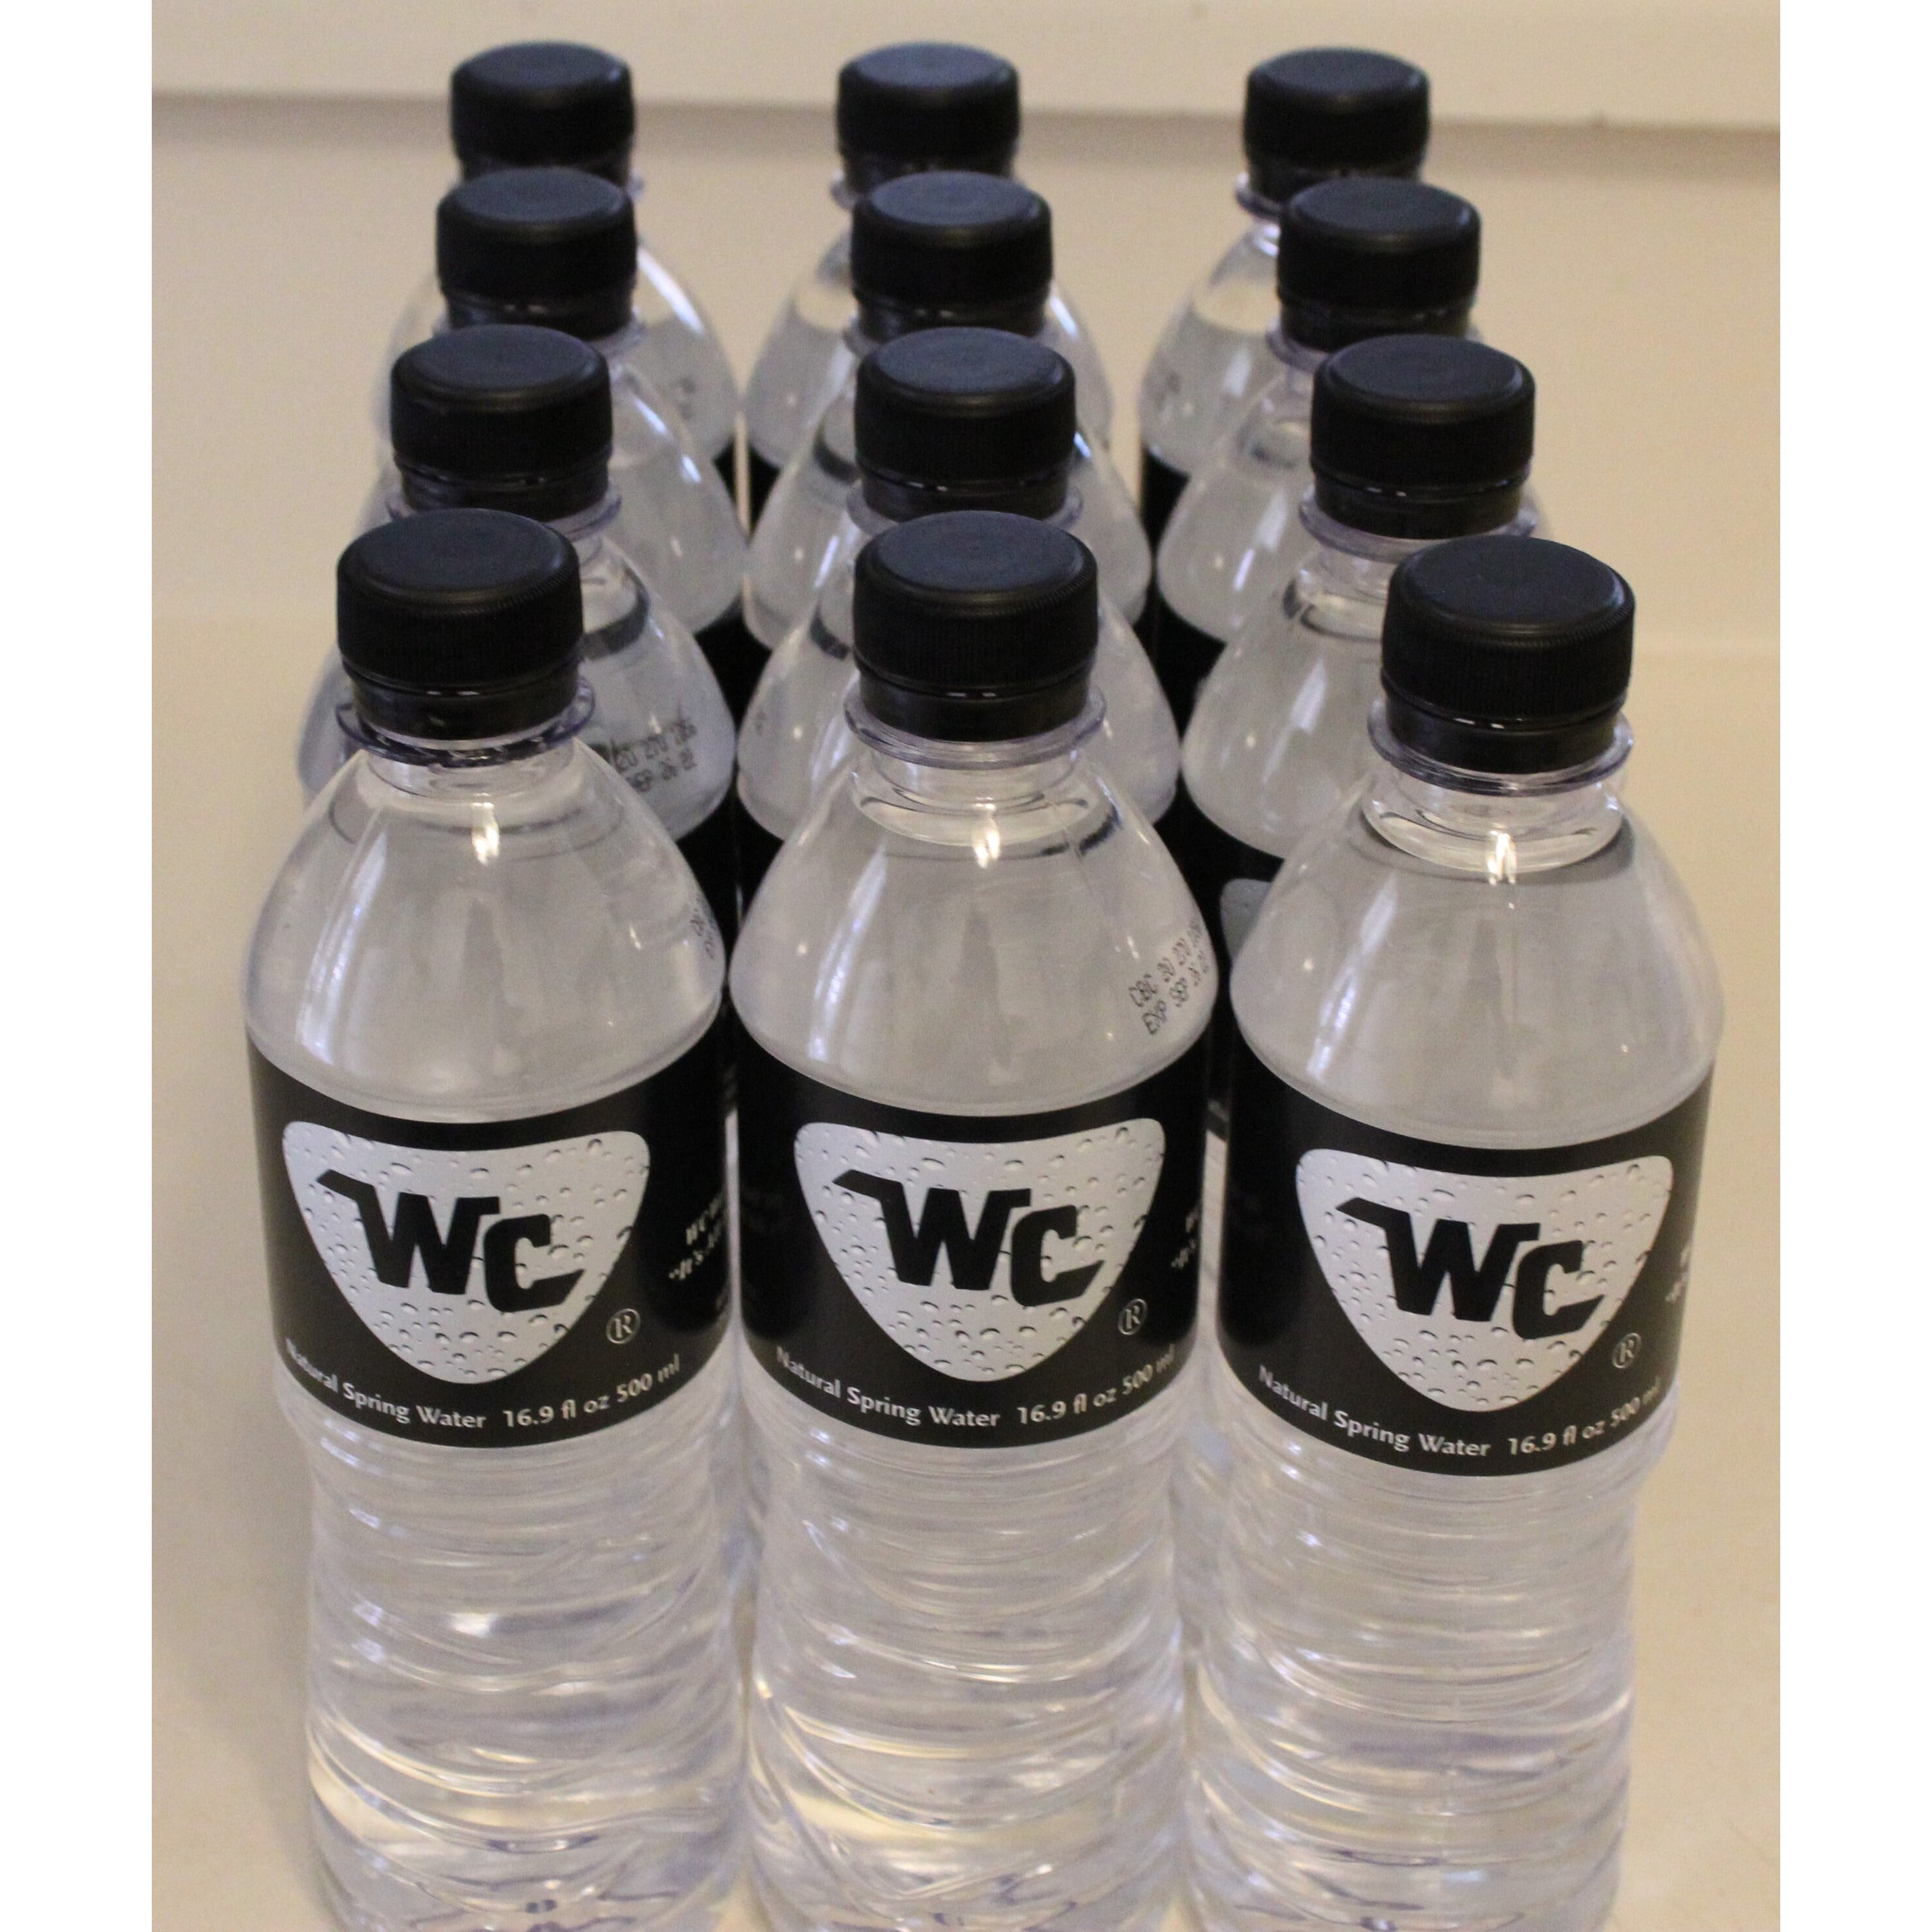 12 Pack (16.9 FL. OZ.) Wc Water Bottles